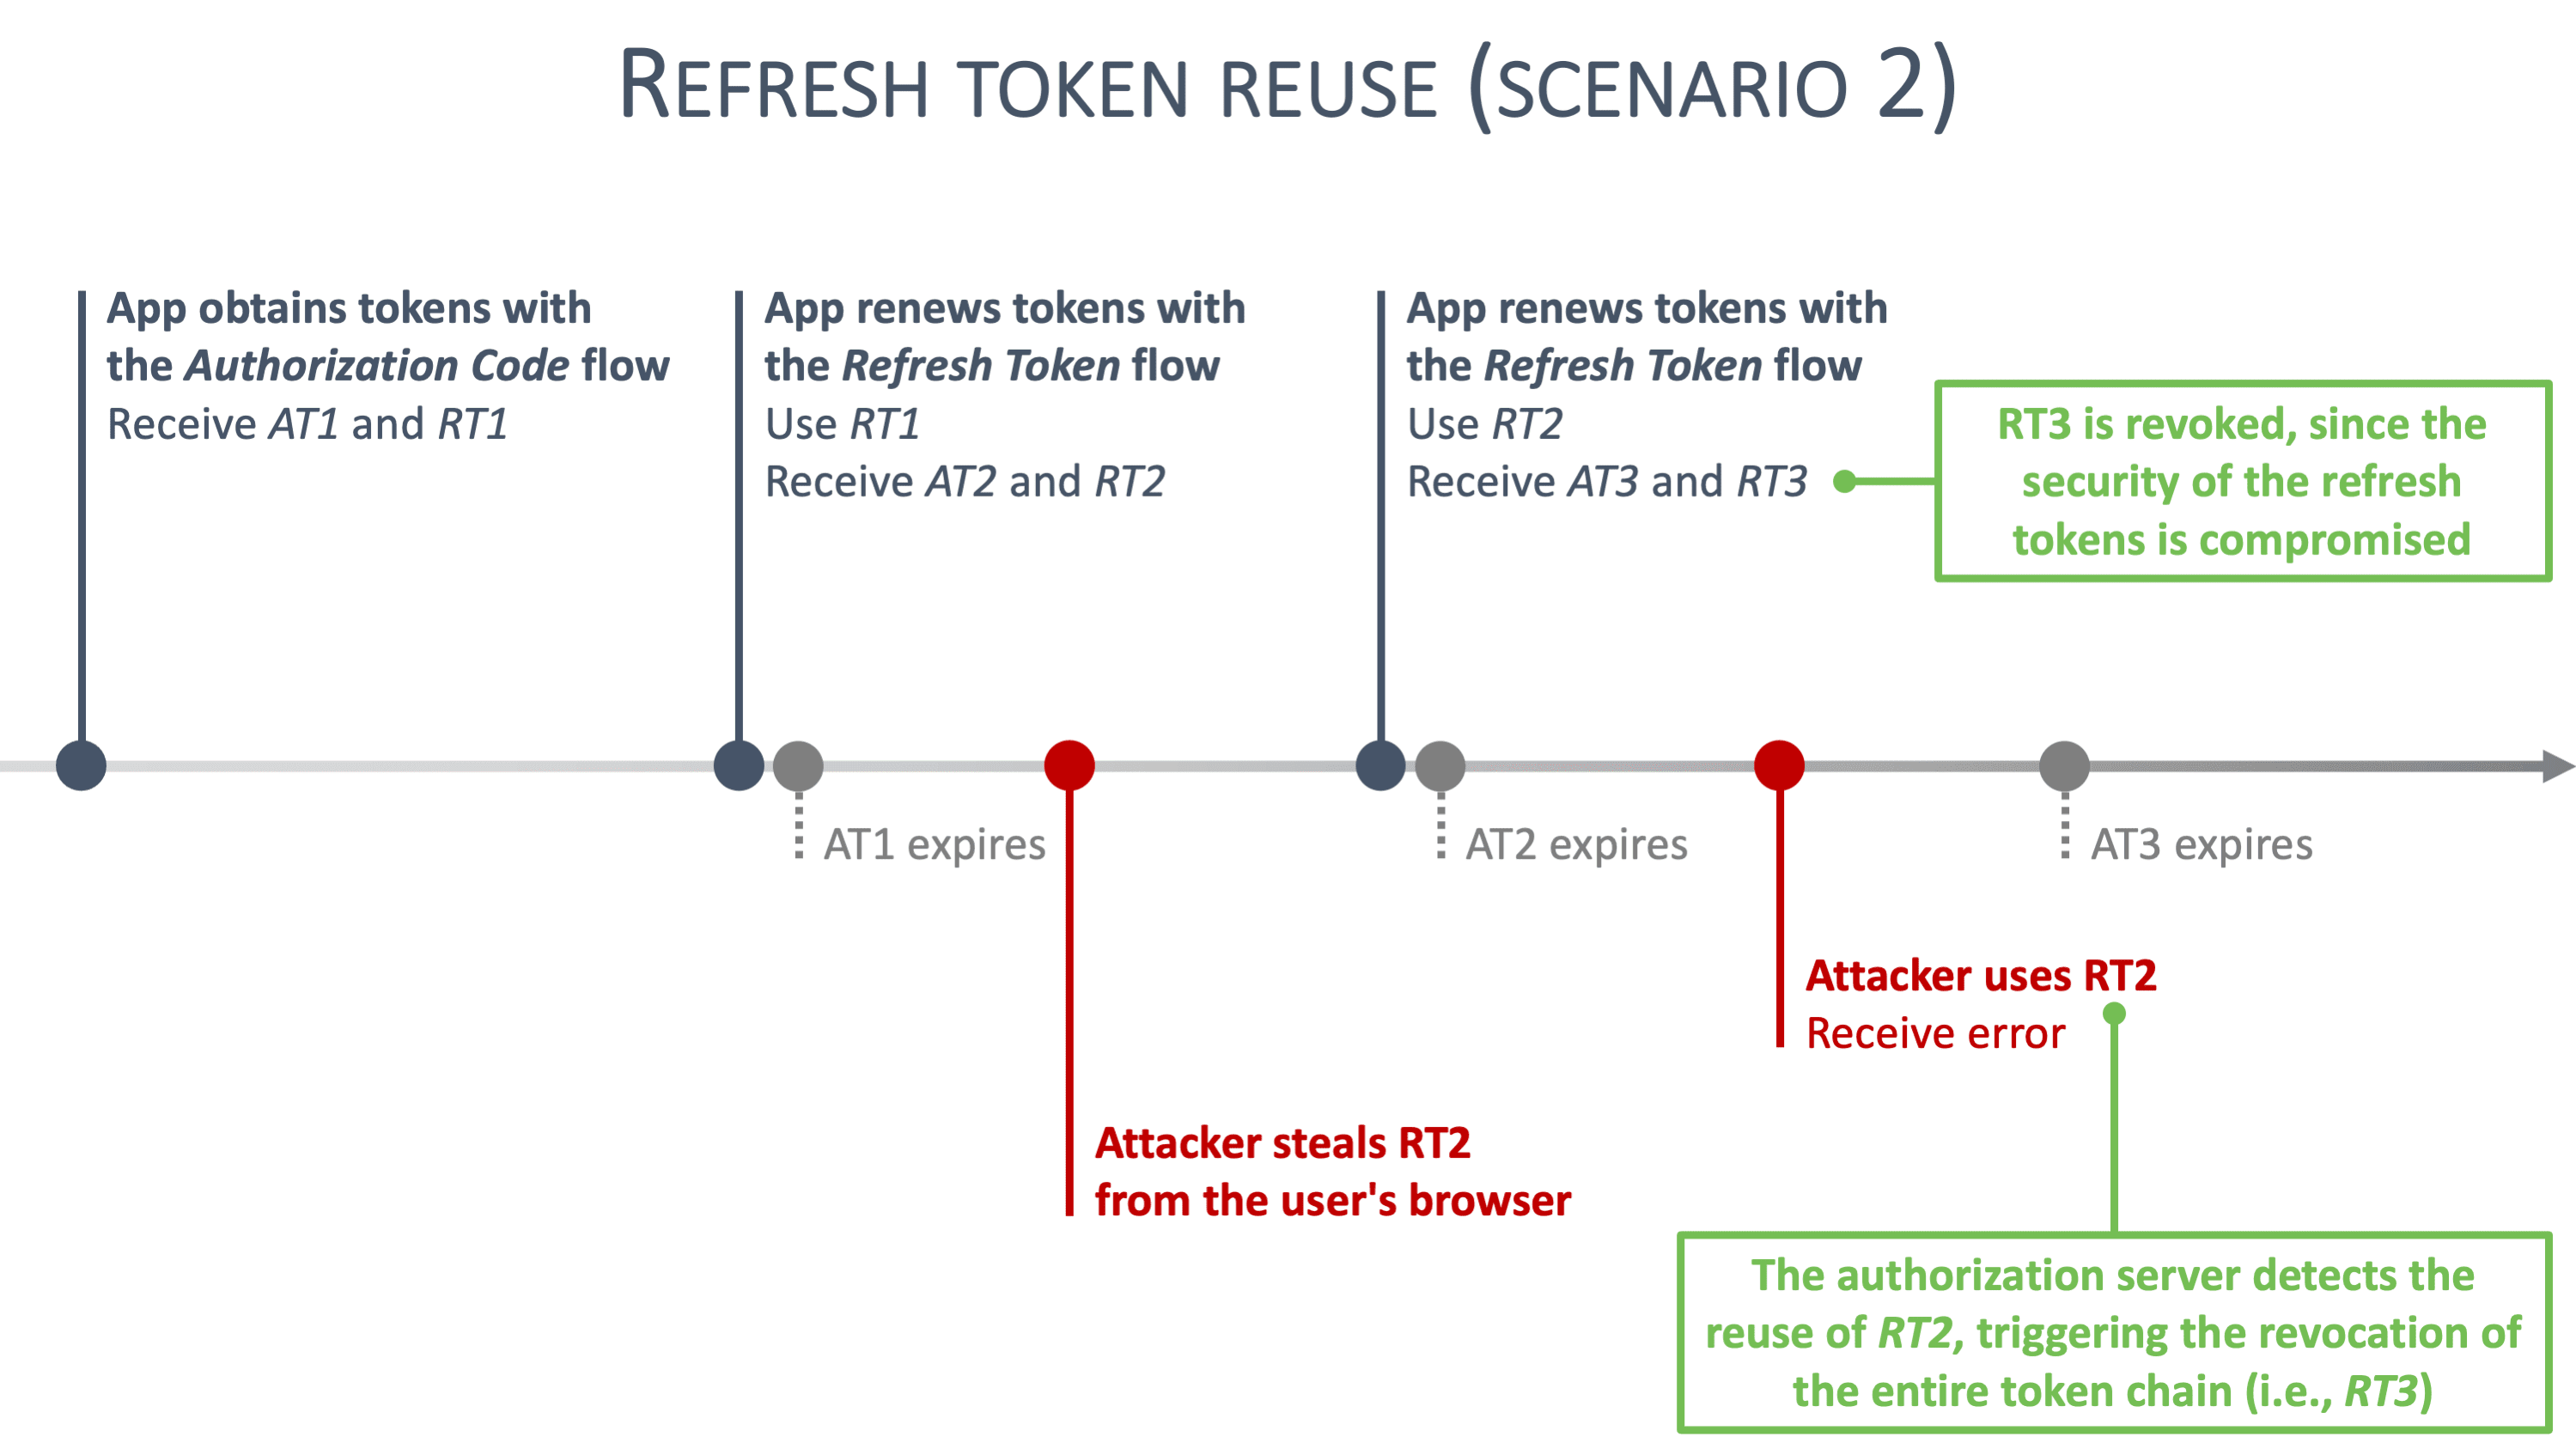 Refresh token reuse scenario 2 depicting end-to-end flow